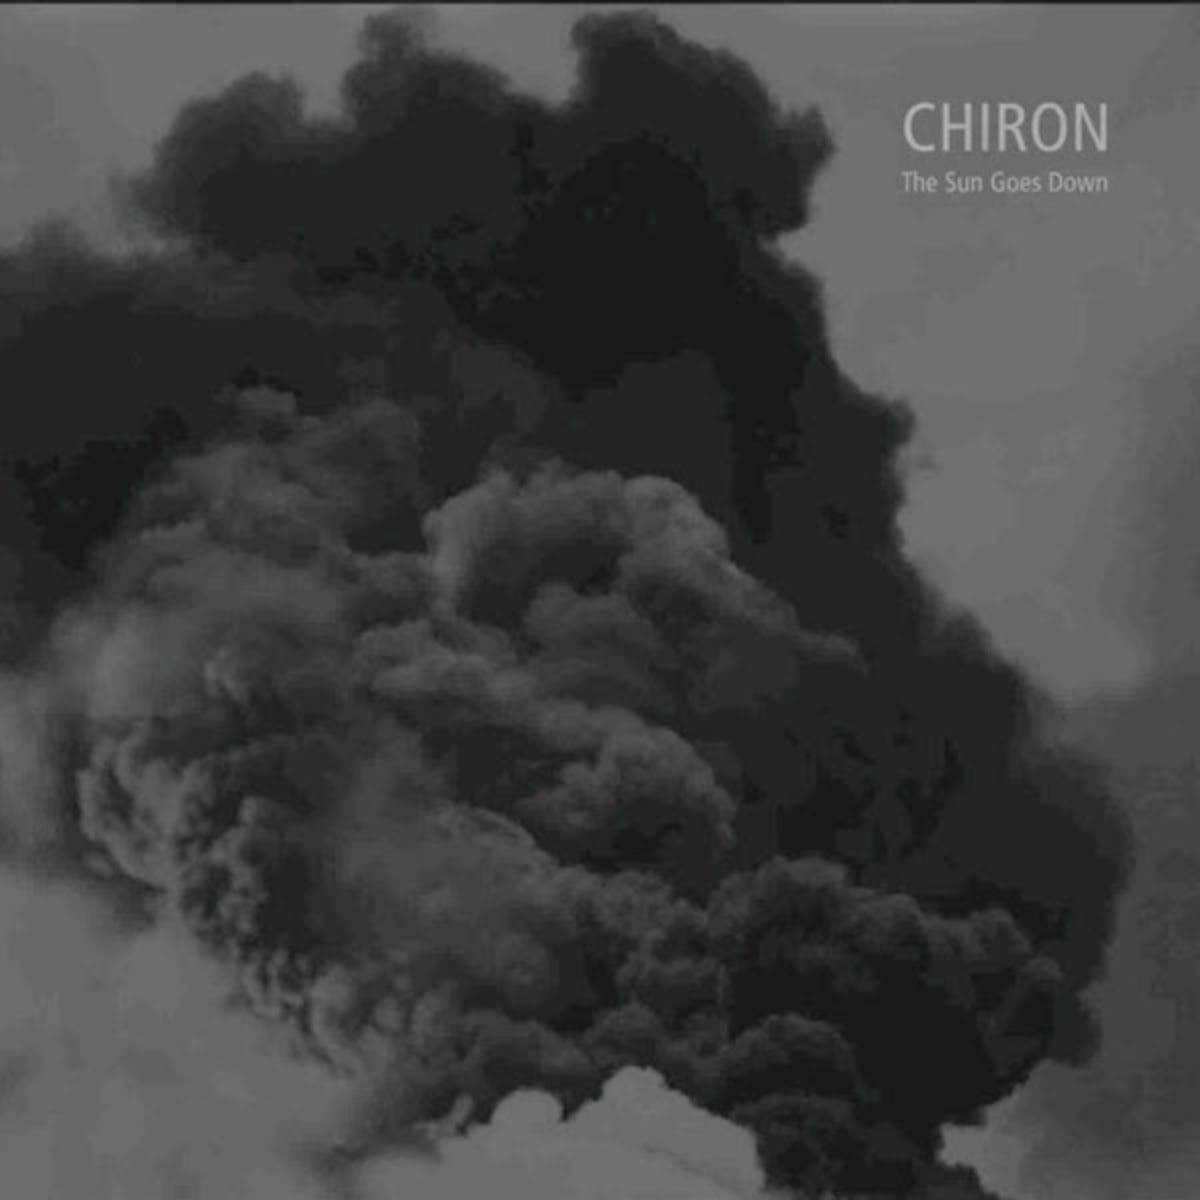 Chiron – the Sun Goes Down (album – Dark Vinyl)